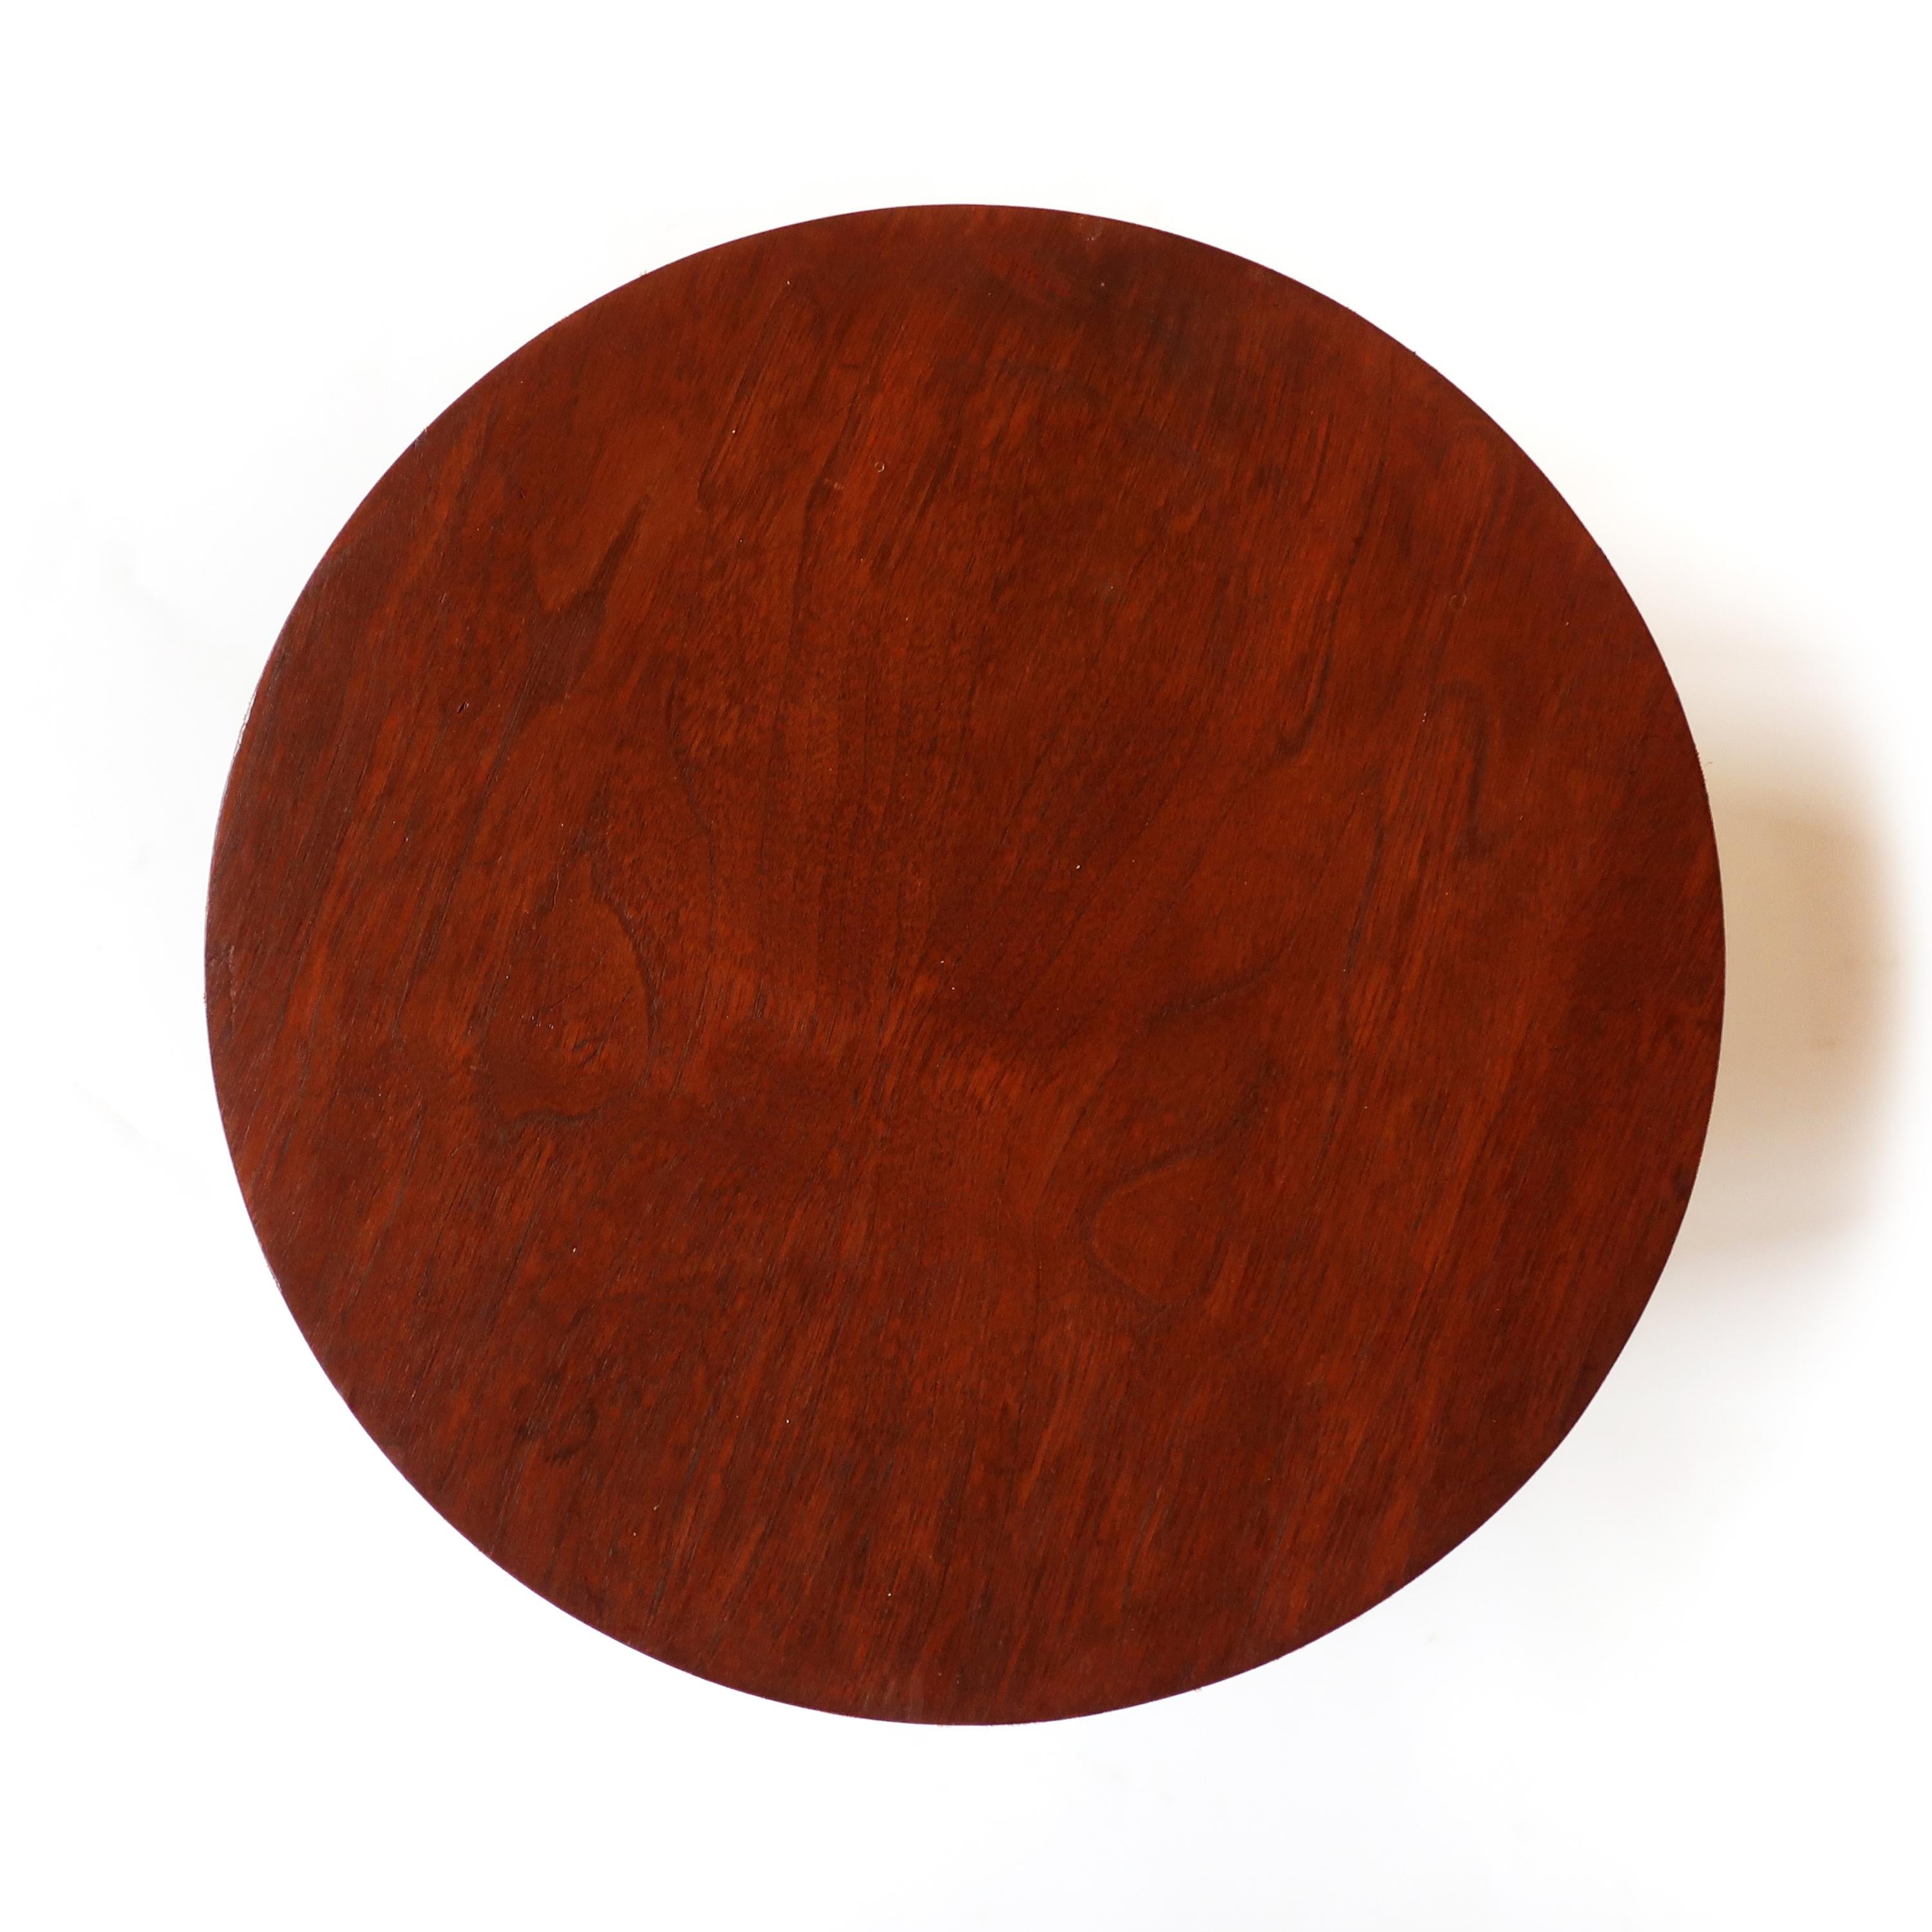 Mid-Century Modern Walnut Drum Pedestal Table Attr. to Paul Mayen for Habitat / Intrex